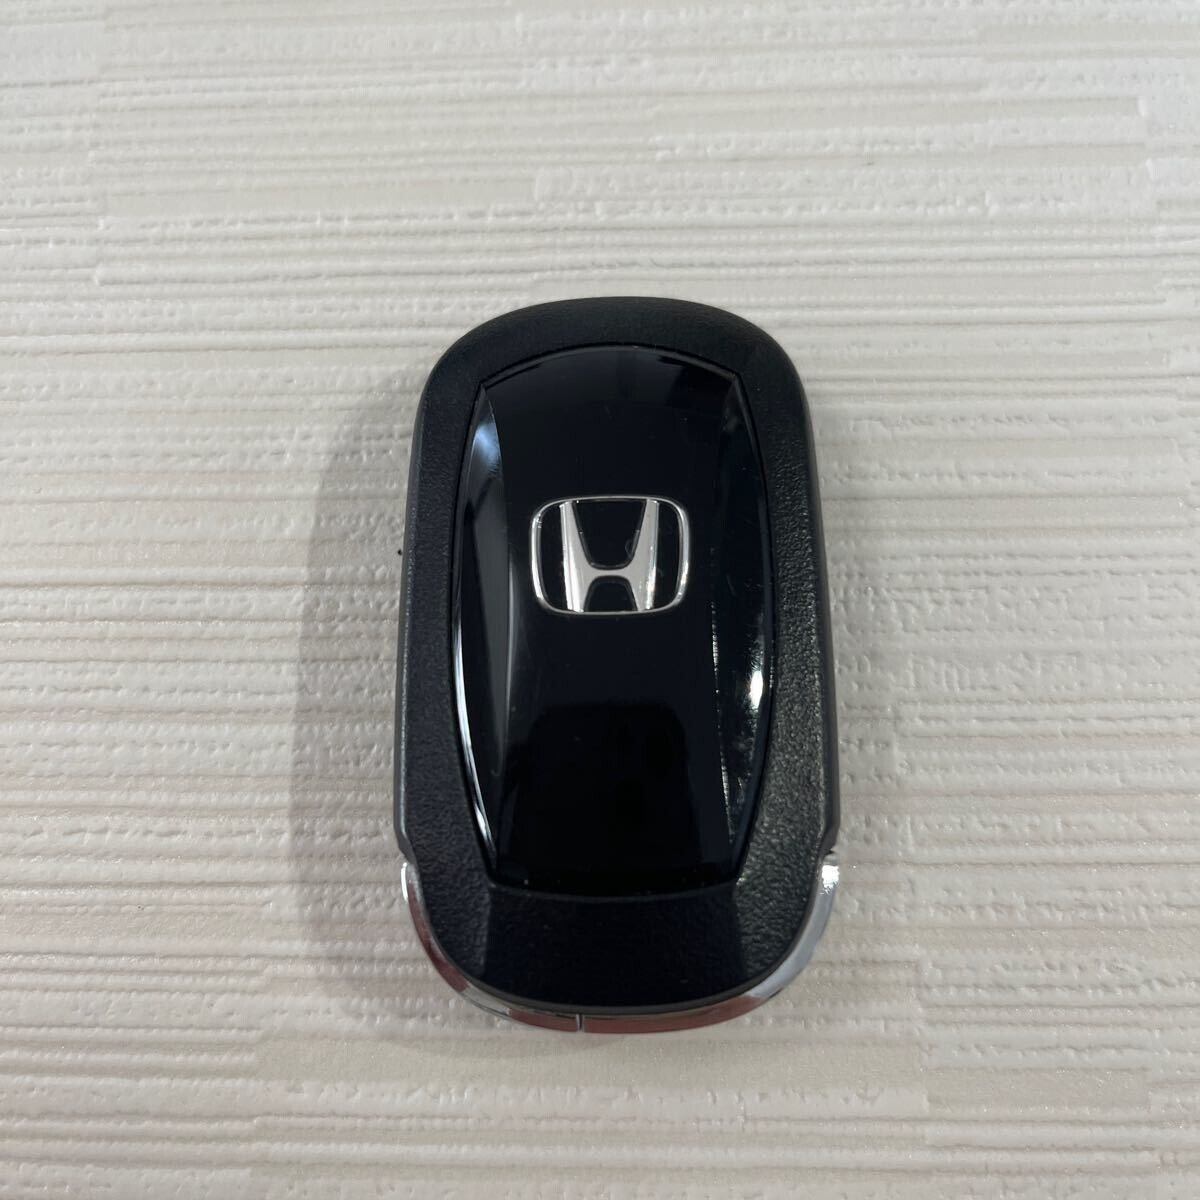 Honda Genuine Smart Key 3 Button (72147-3Mo-J11) Vezel Civic Used Good